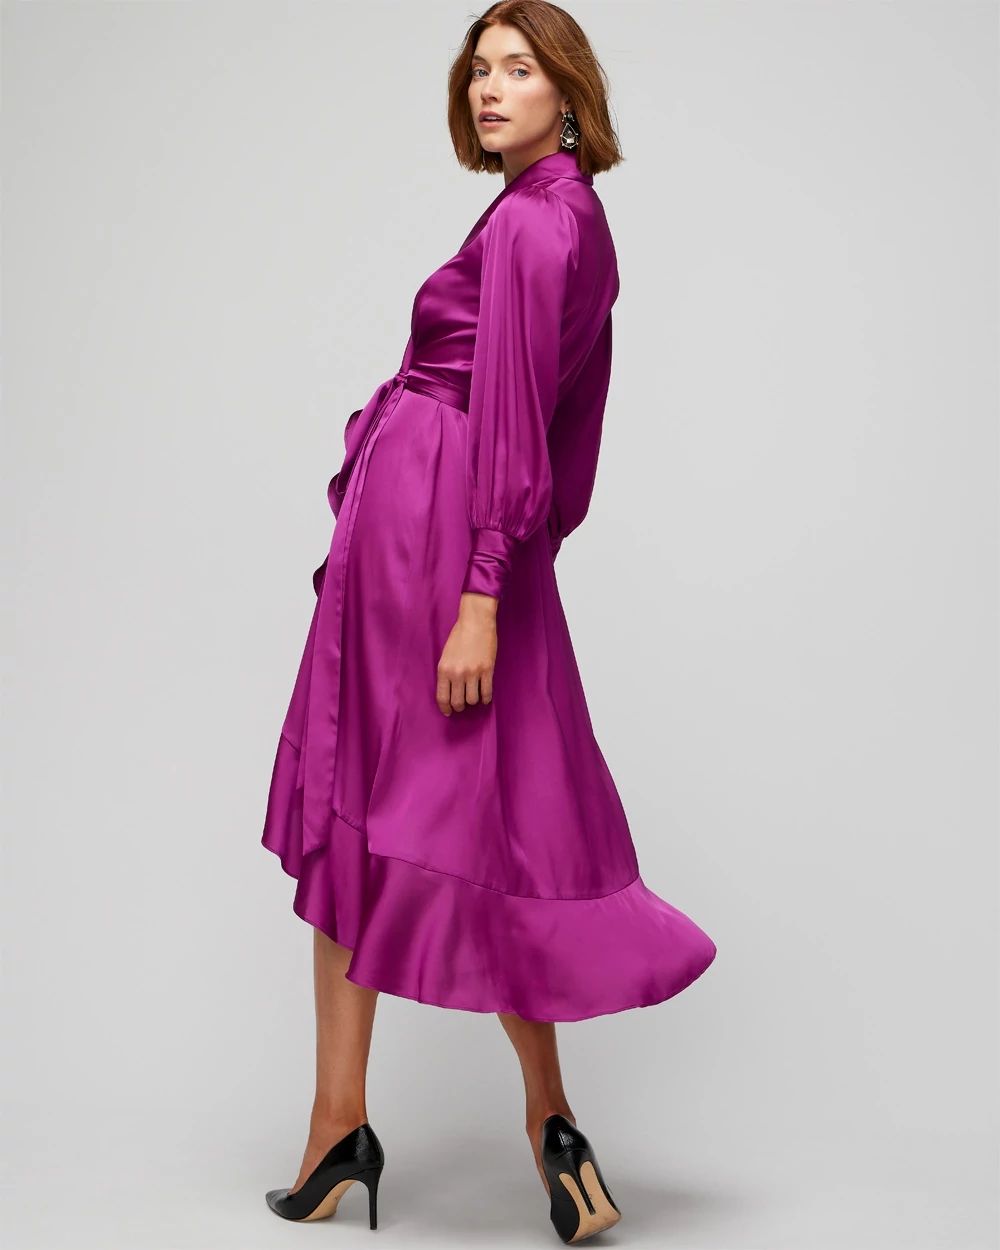 Petite Long Sleeve Satin Ruffle Wrap Dress click to view larger image.